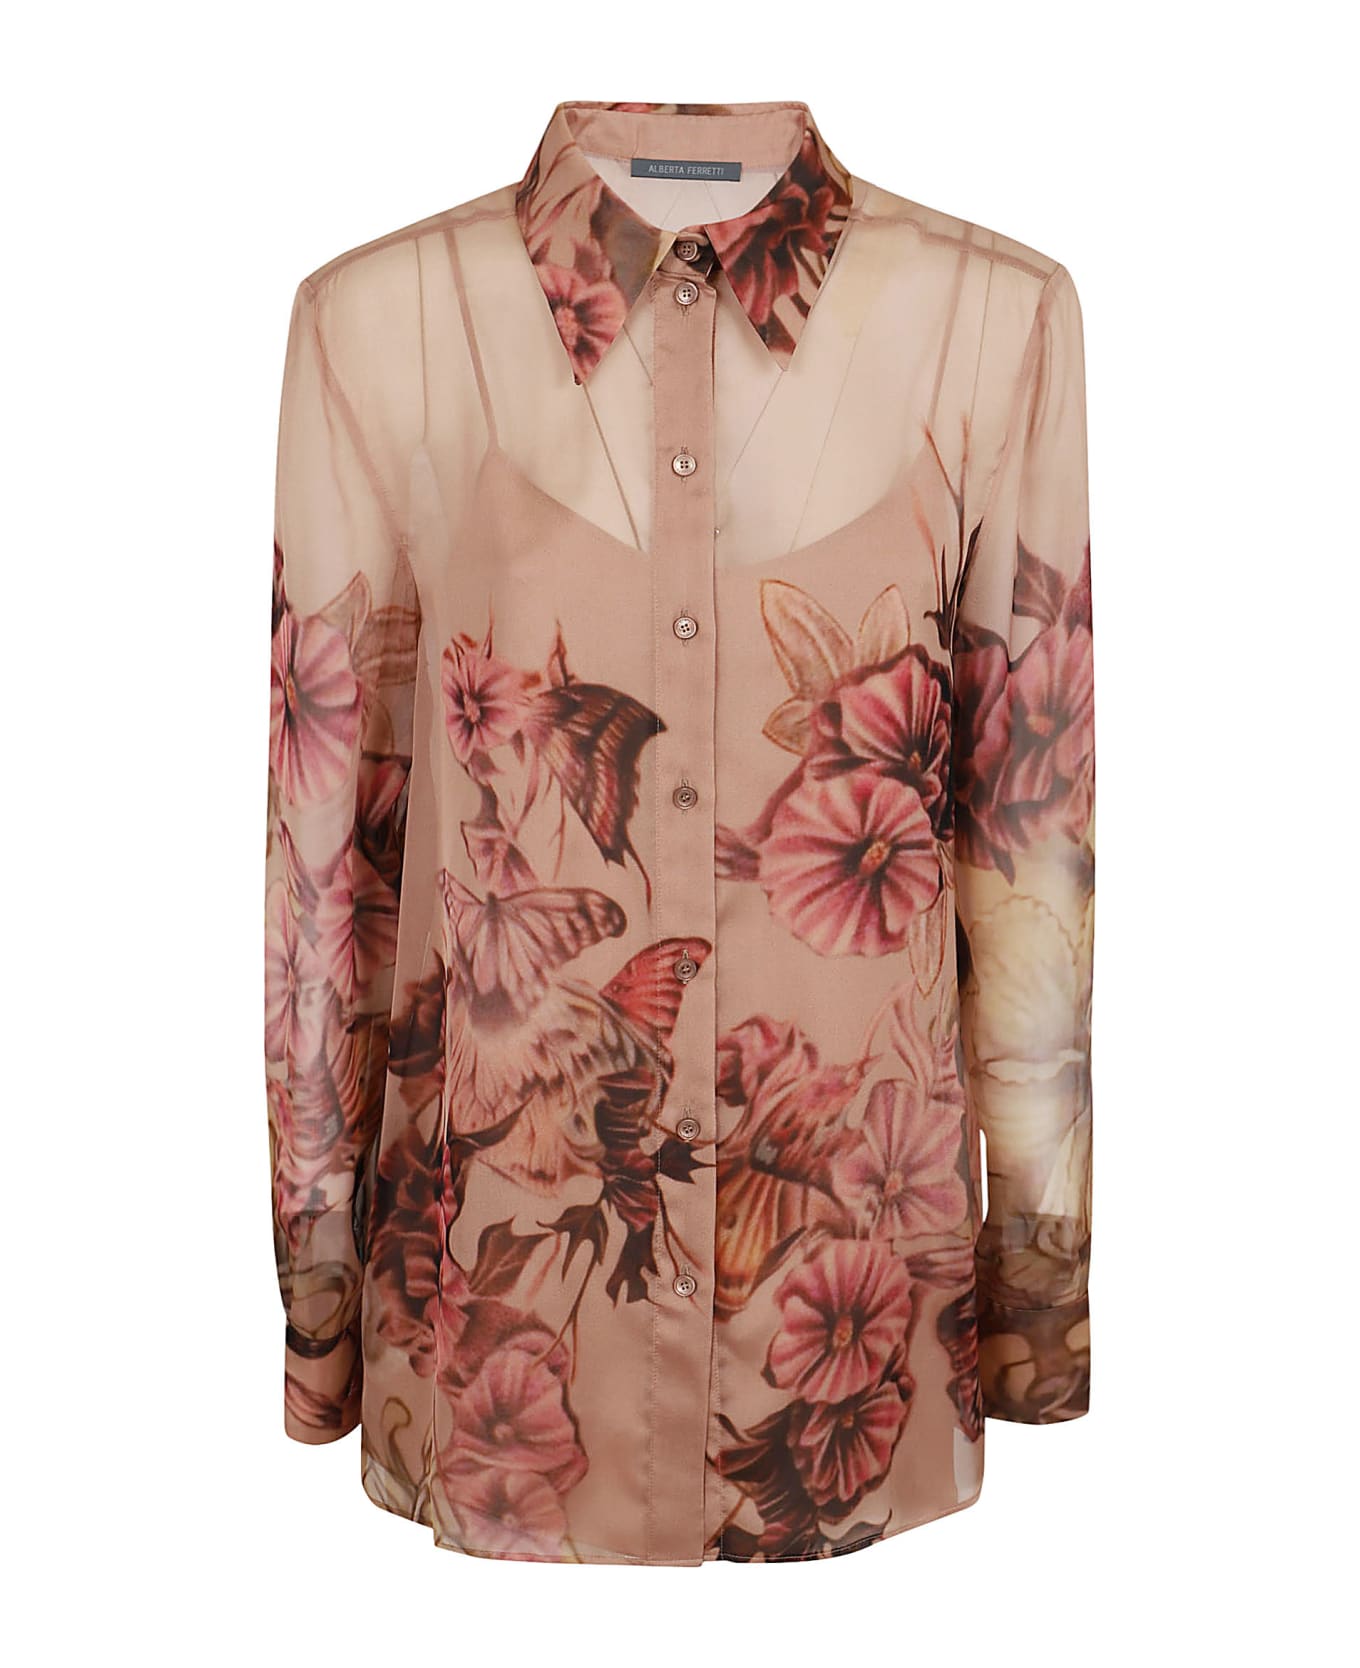 Alberta Ferretti Printed Chiffon Shirt - Fantasia Rosa シャツ